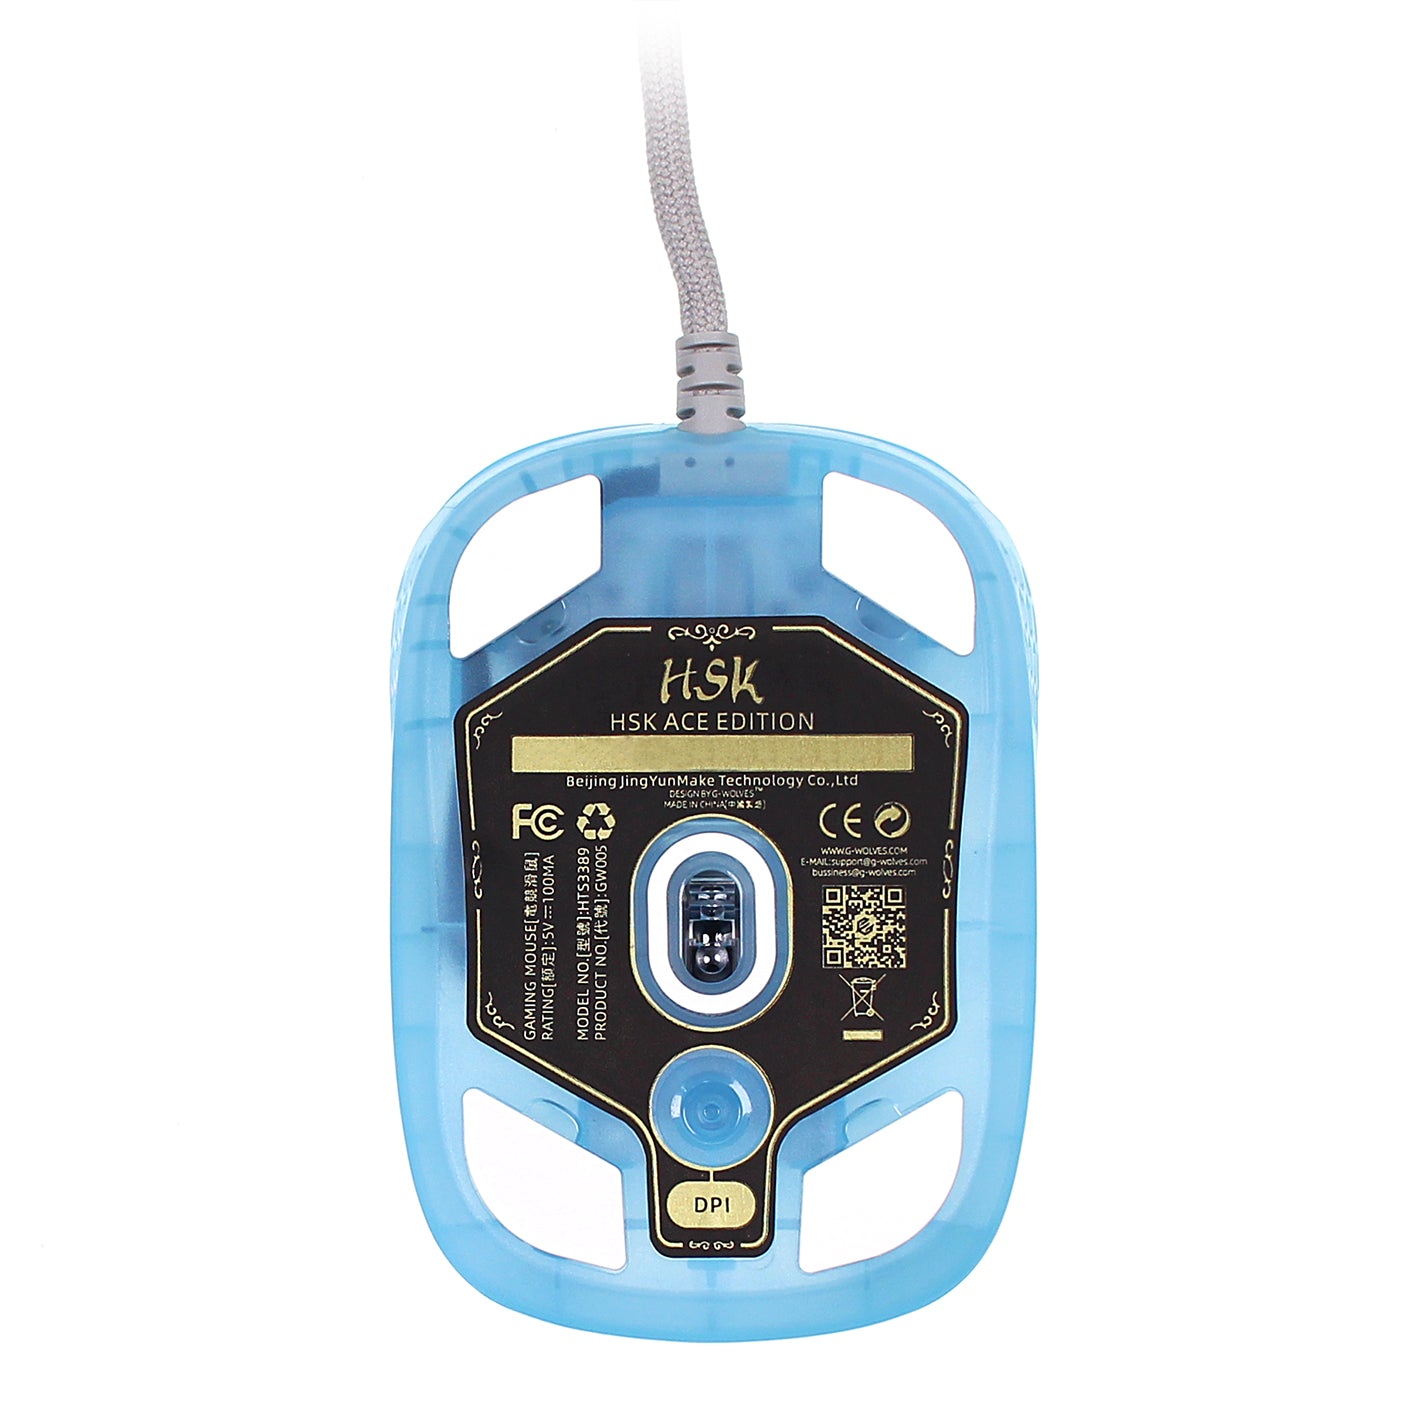 G-wolves HSK "Husky" Ultralight Wired Gaming Mouse - 3389 Sensor - Transparent Blue Edition